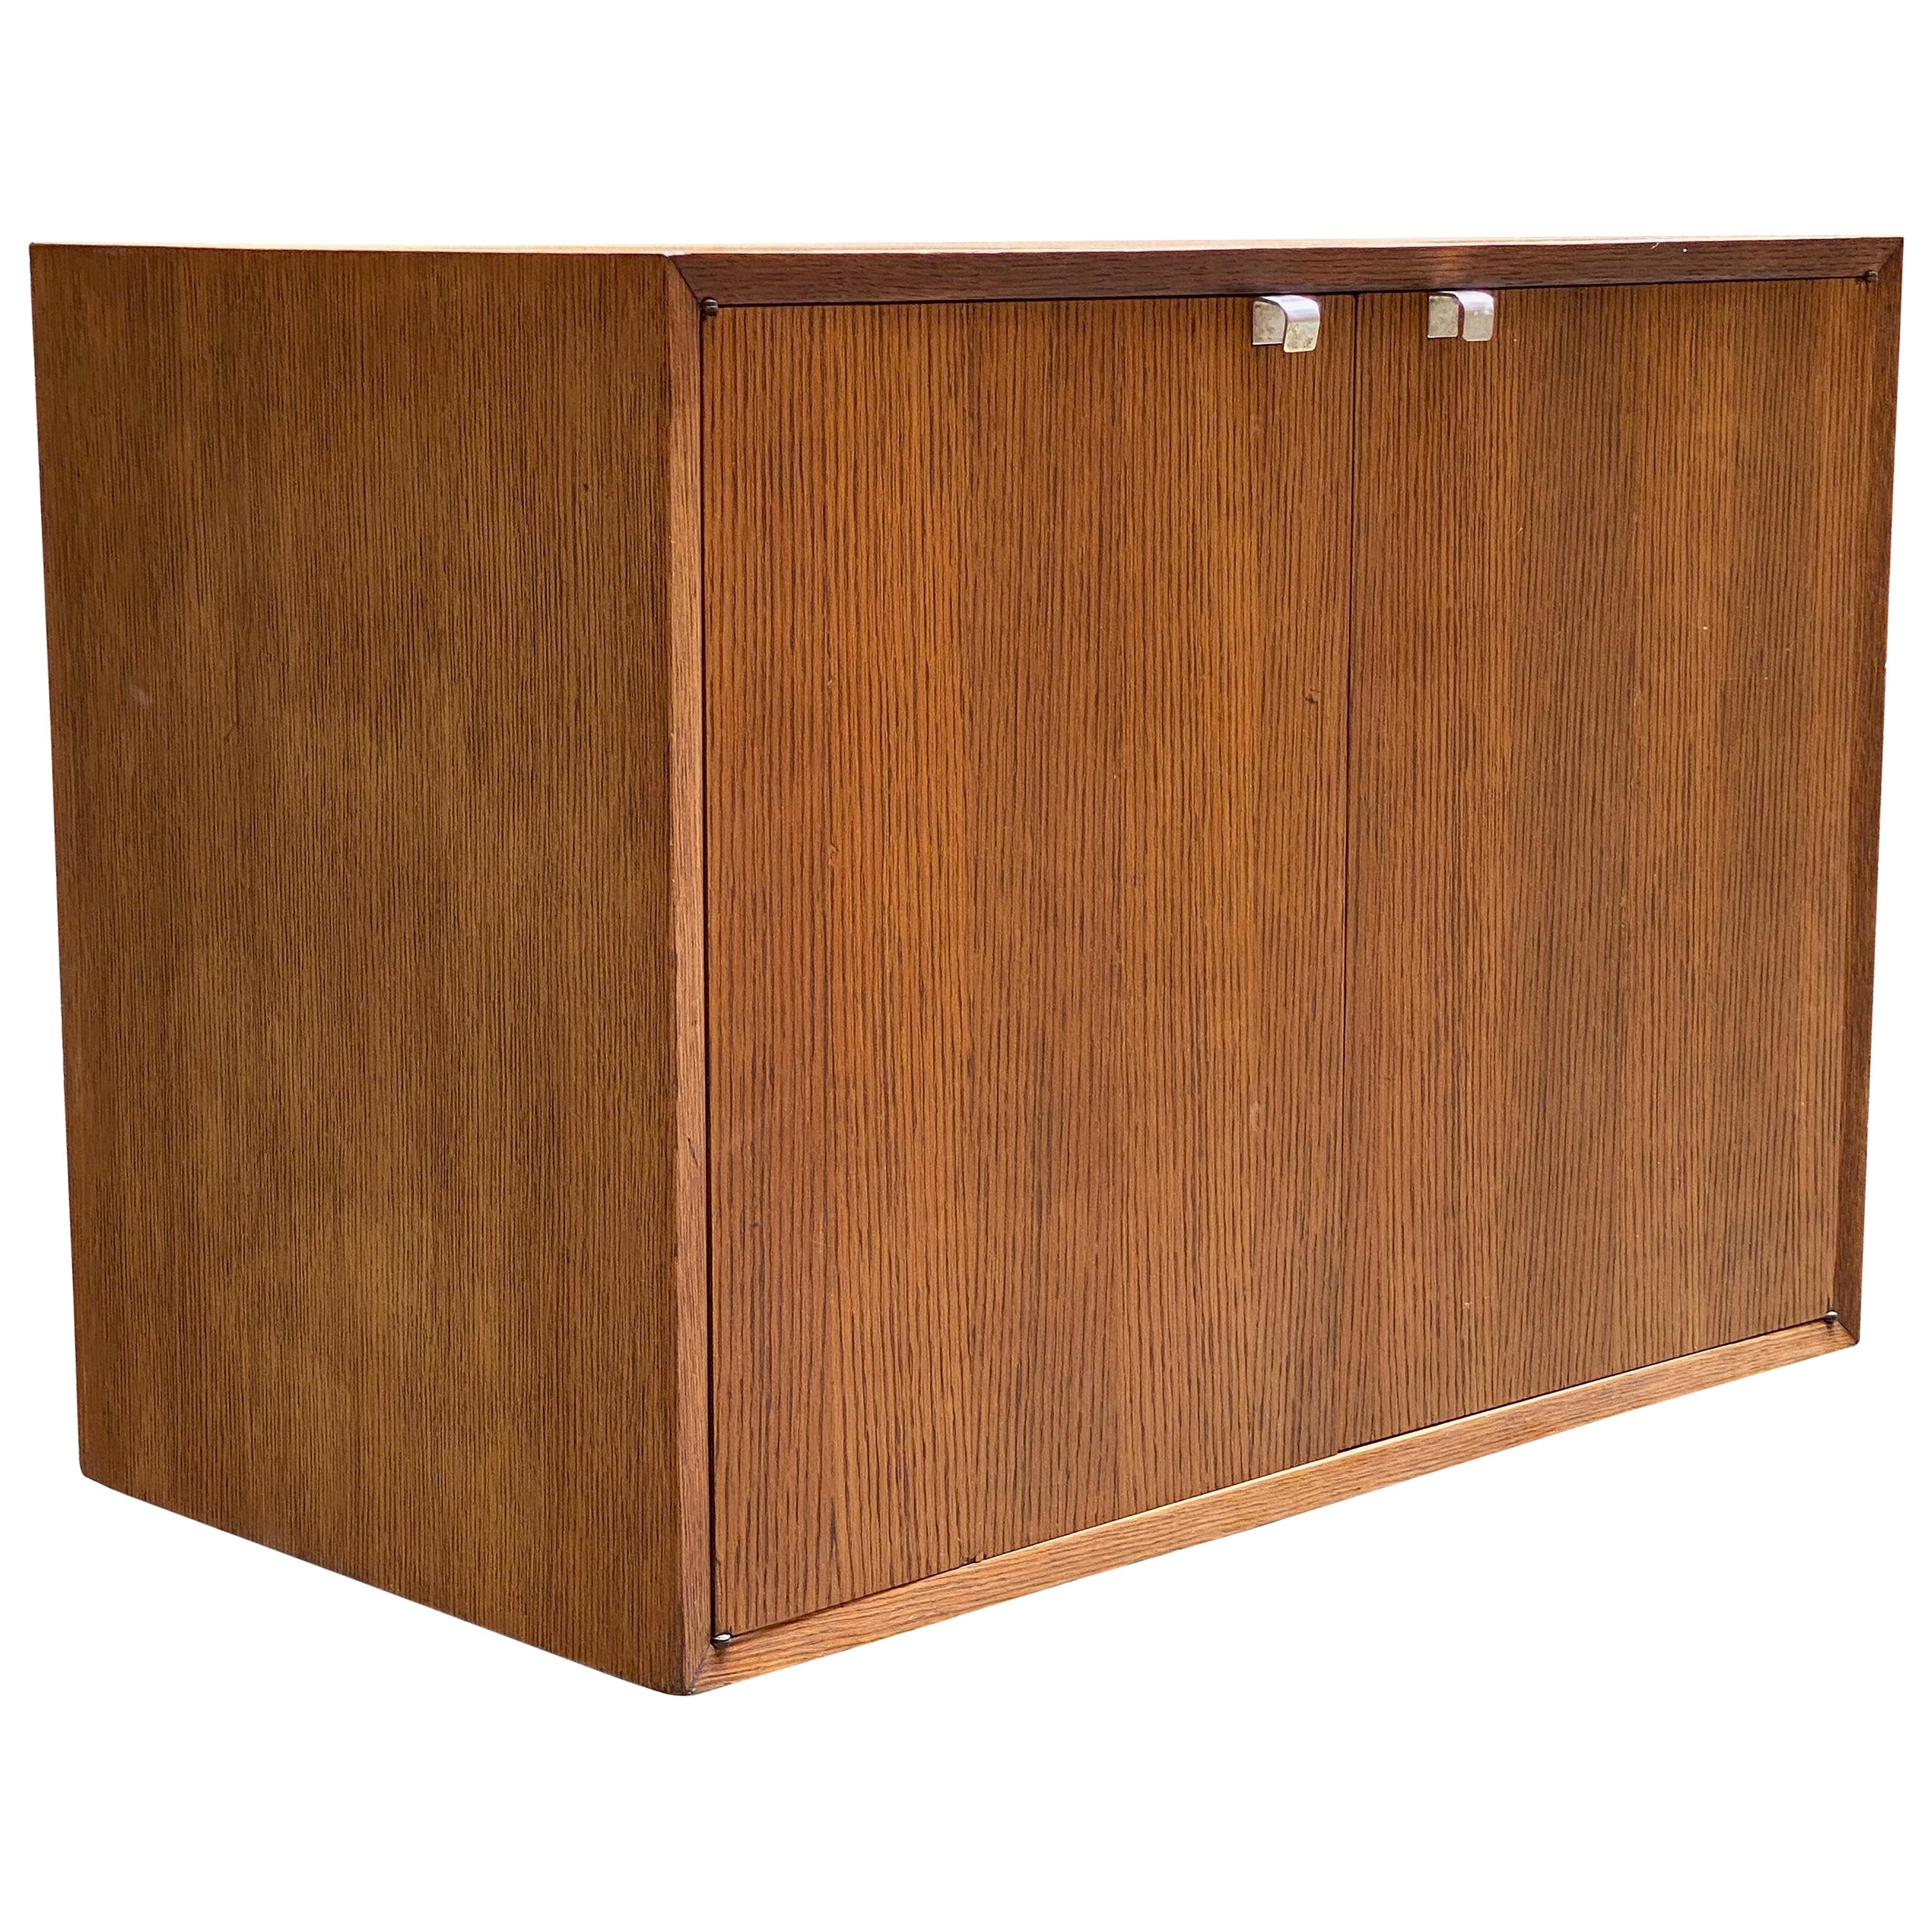 George Nelson for Herman Miller Modular Oak Utility Cabinet